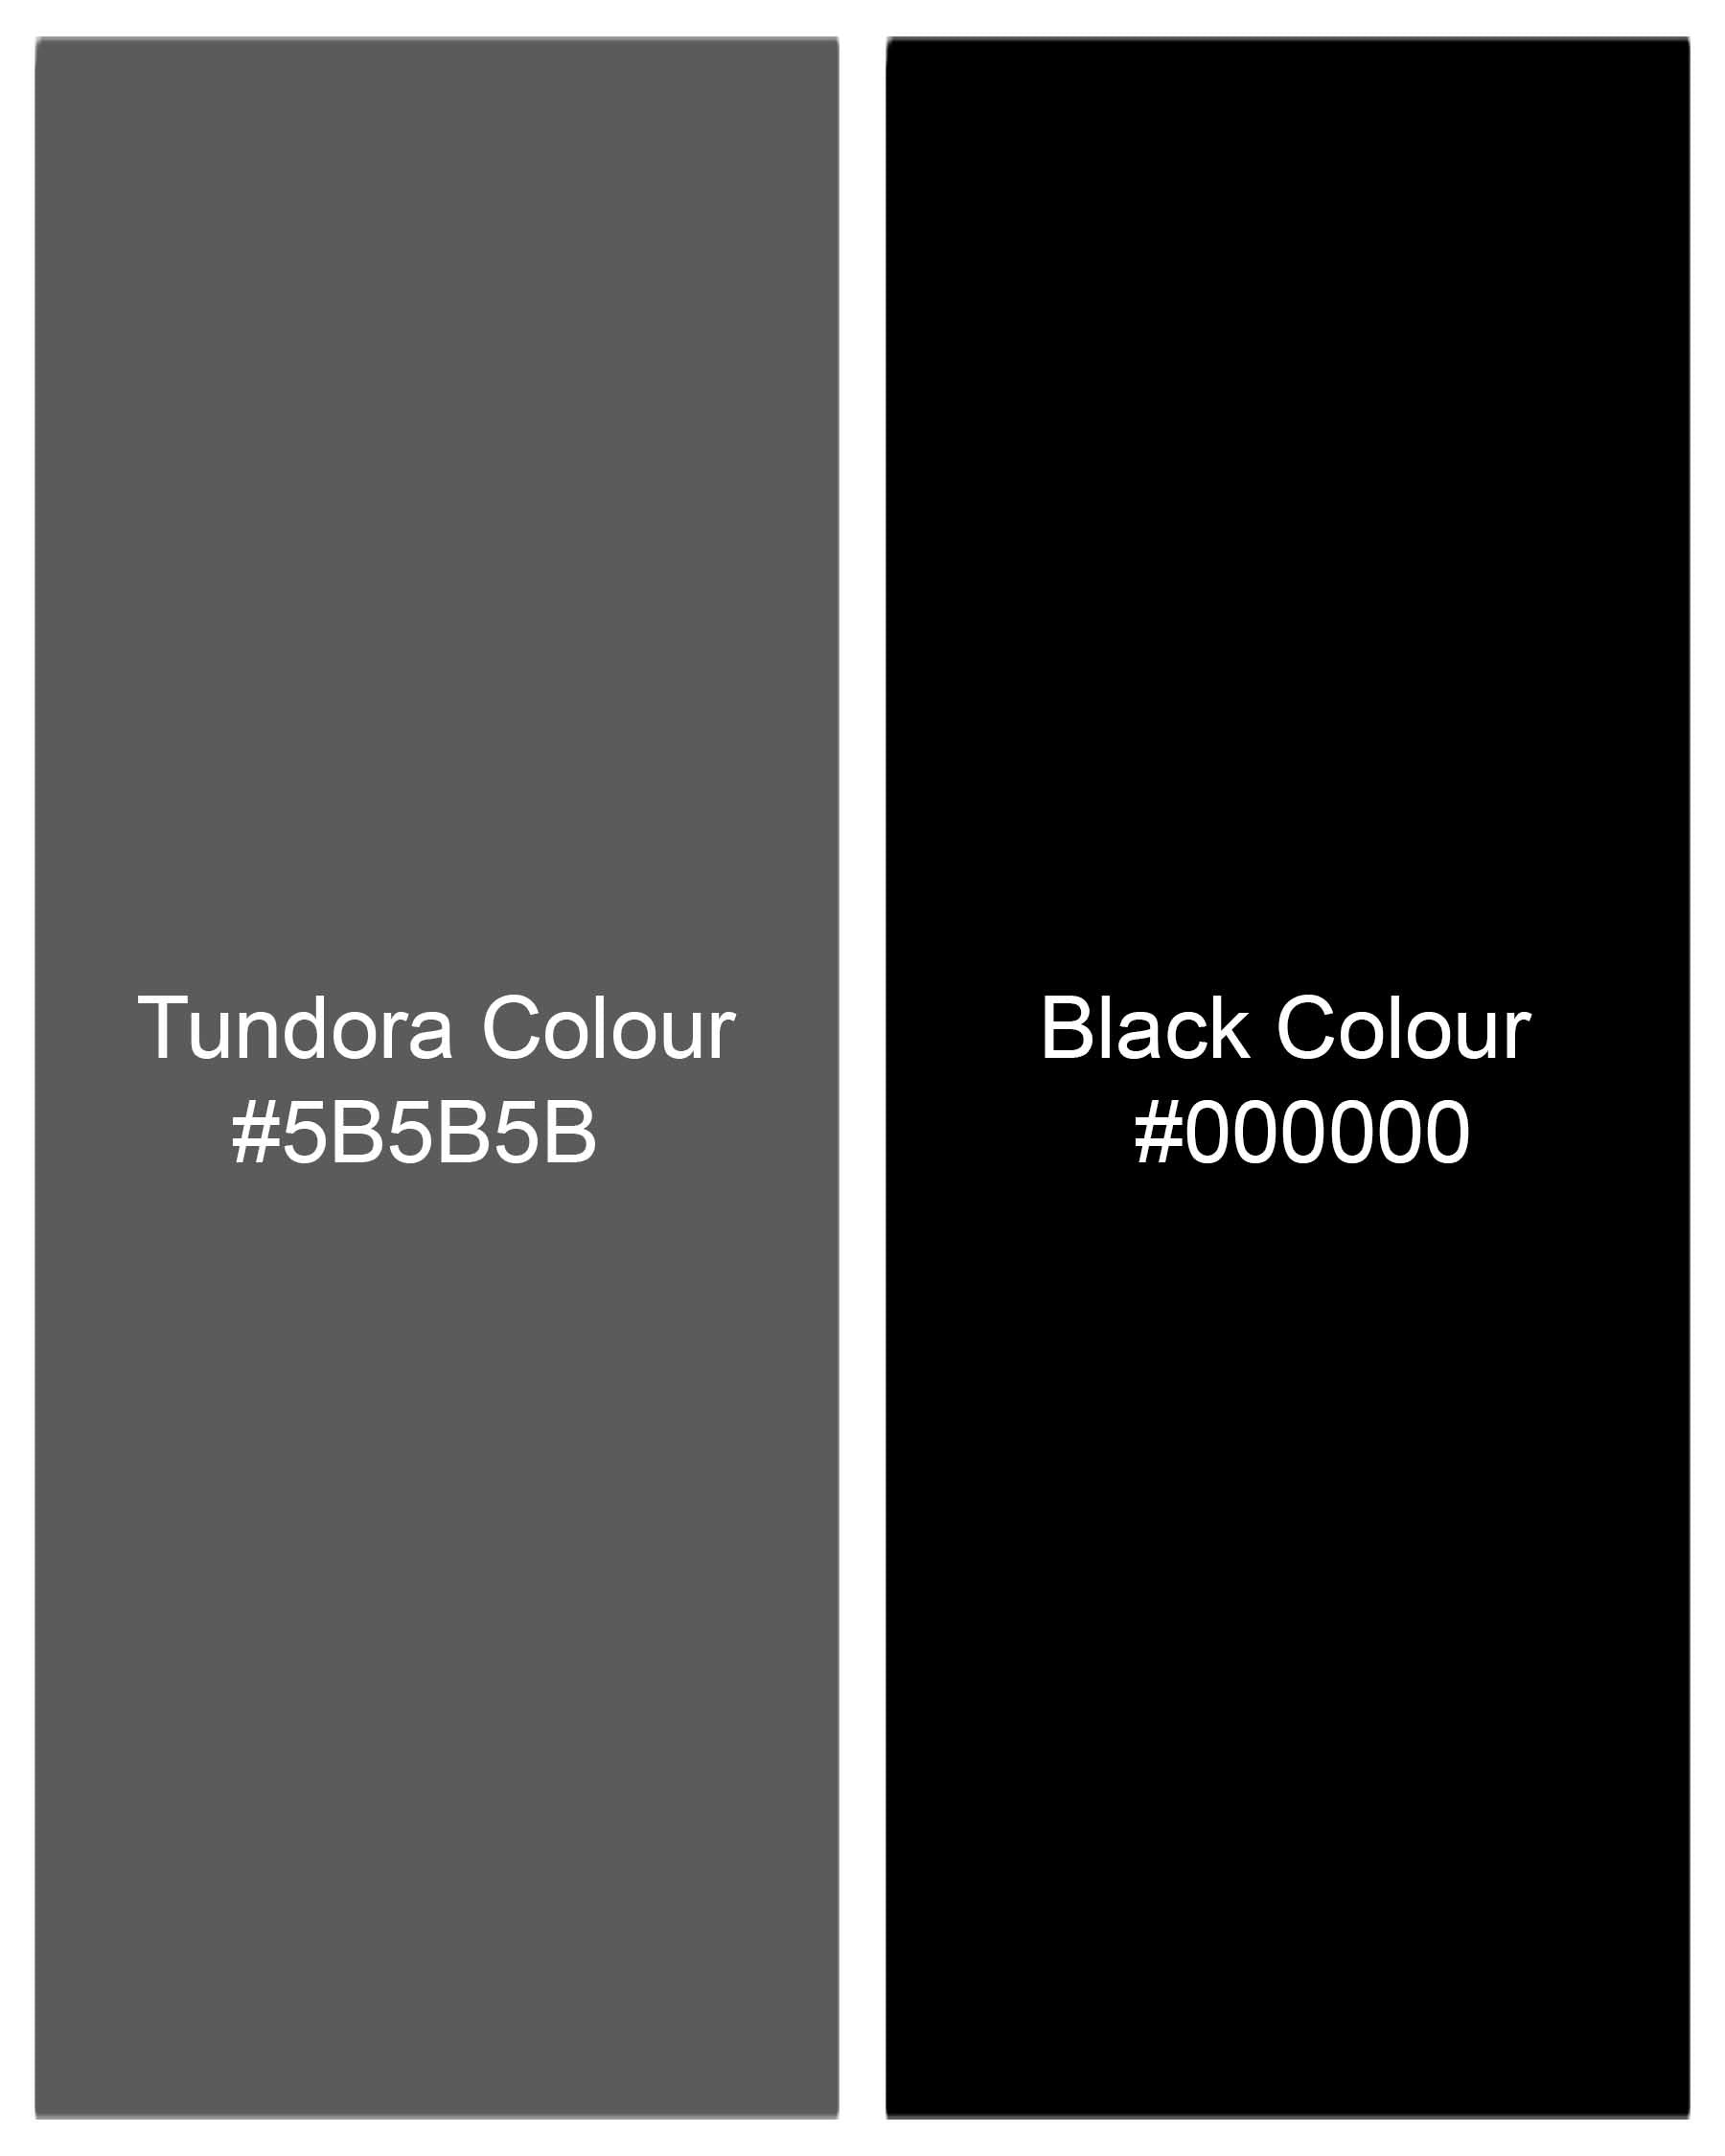 Jade Black and Tundora Gray Premium Cotton Shirt 7796-BLK-38,7796-BLK-38,7796-BLK-39,7796-BLK-39,7796-BLK-40,7796-BLK-40,7796-BLK-42,7796-BLK-42,7796-BLK-44,7796-BLK-44,7796-BLK-46,7796-BLK-46,7796-BLK-48,7796-BLK-48,7796-BLK-50,7796-BLK-50,7796-BLK-52,7796-BLK-52